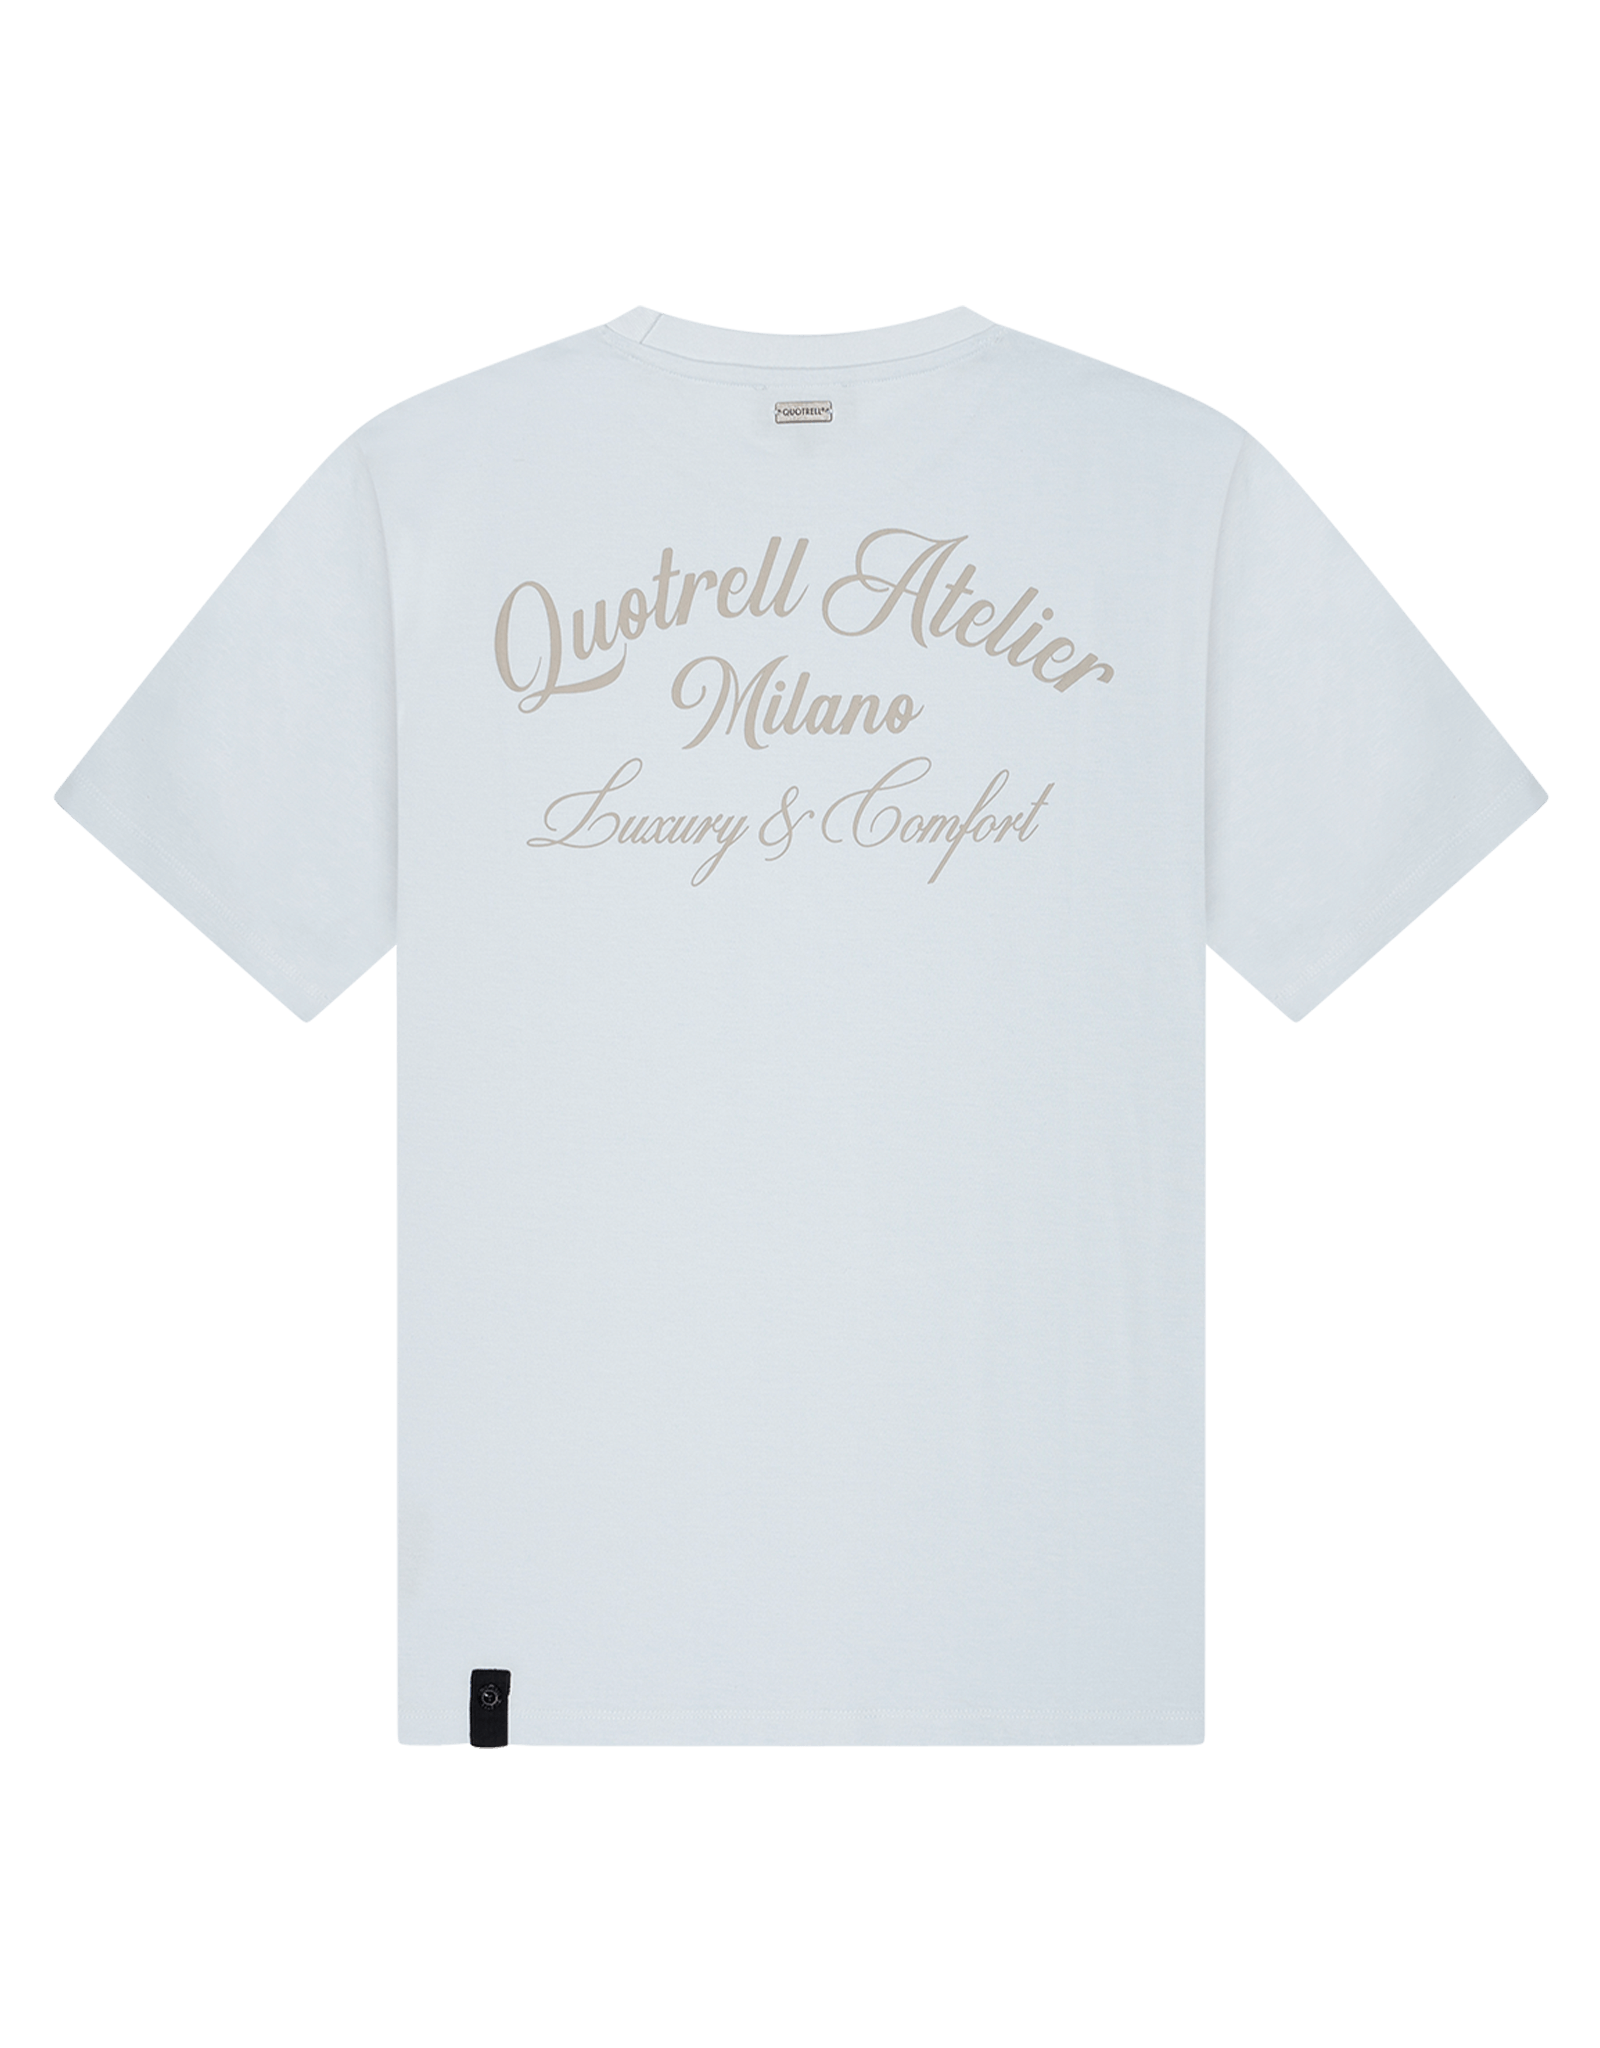 Quotrell Atelier Milano T-Shirt